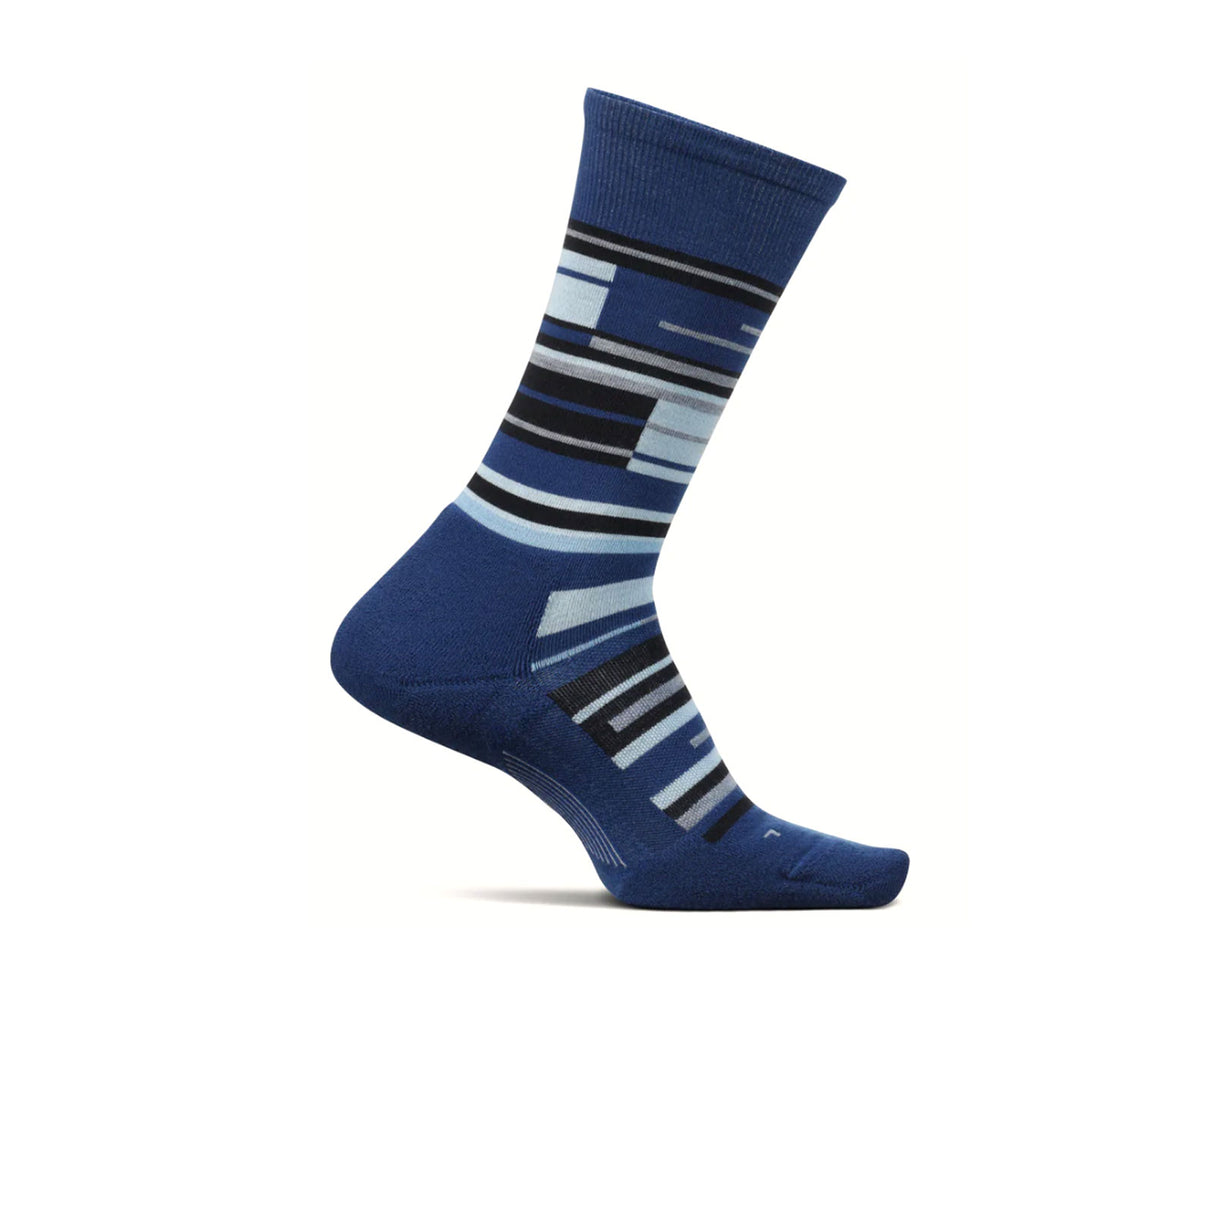 Feetures Max Cush Classic Rib Crew Sock (Men) - Transit Blue Accessories - Socks - Lifestyle - The Heel Shoe Fitters